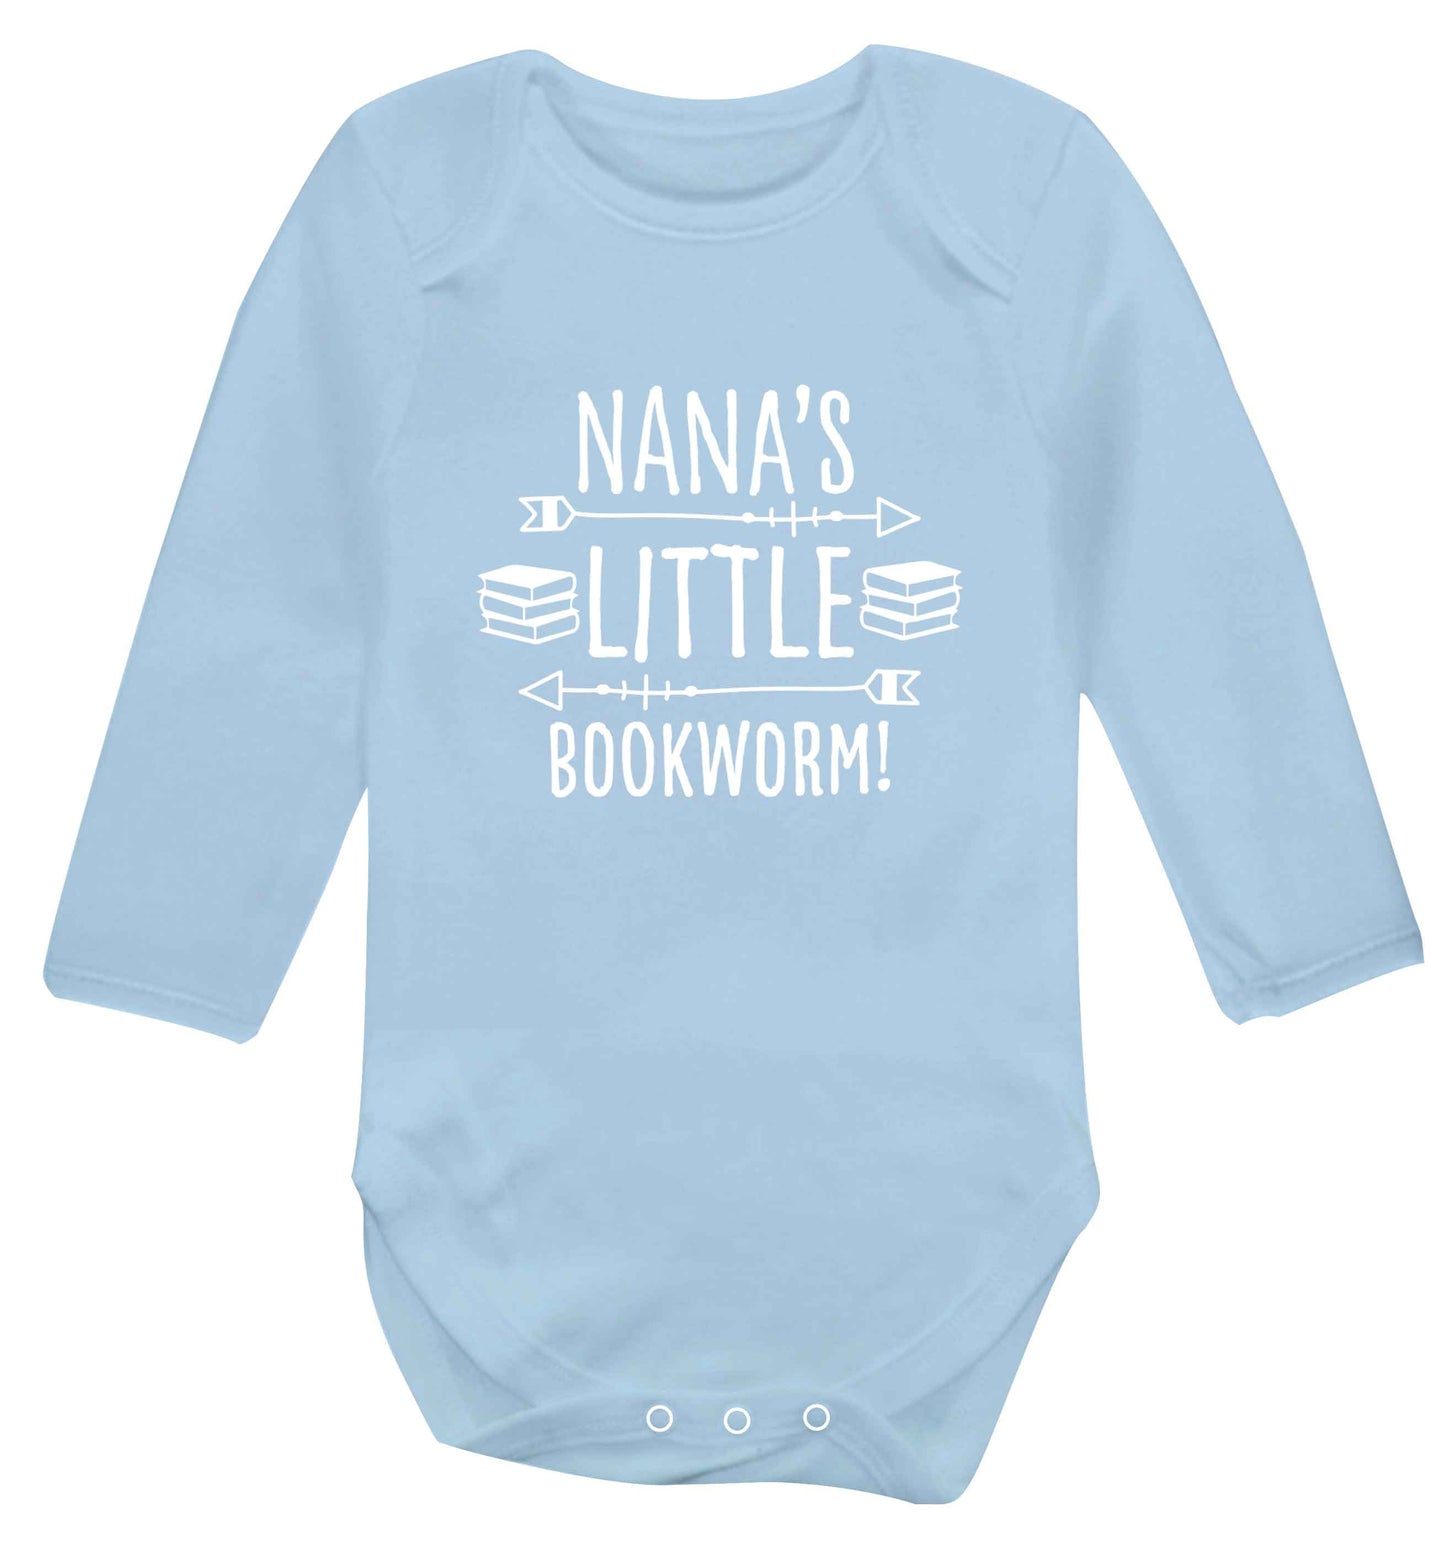 Nana's little bookworm baby vest long sleeved pale blue 6-12 months